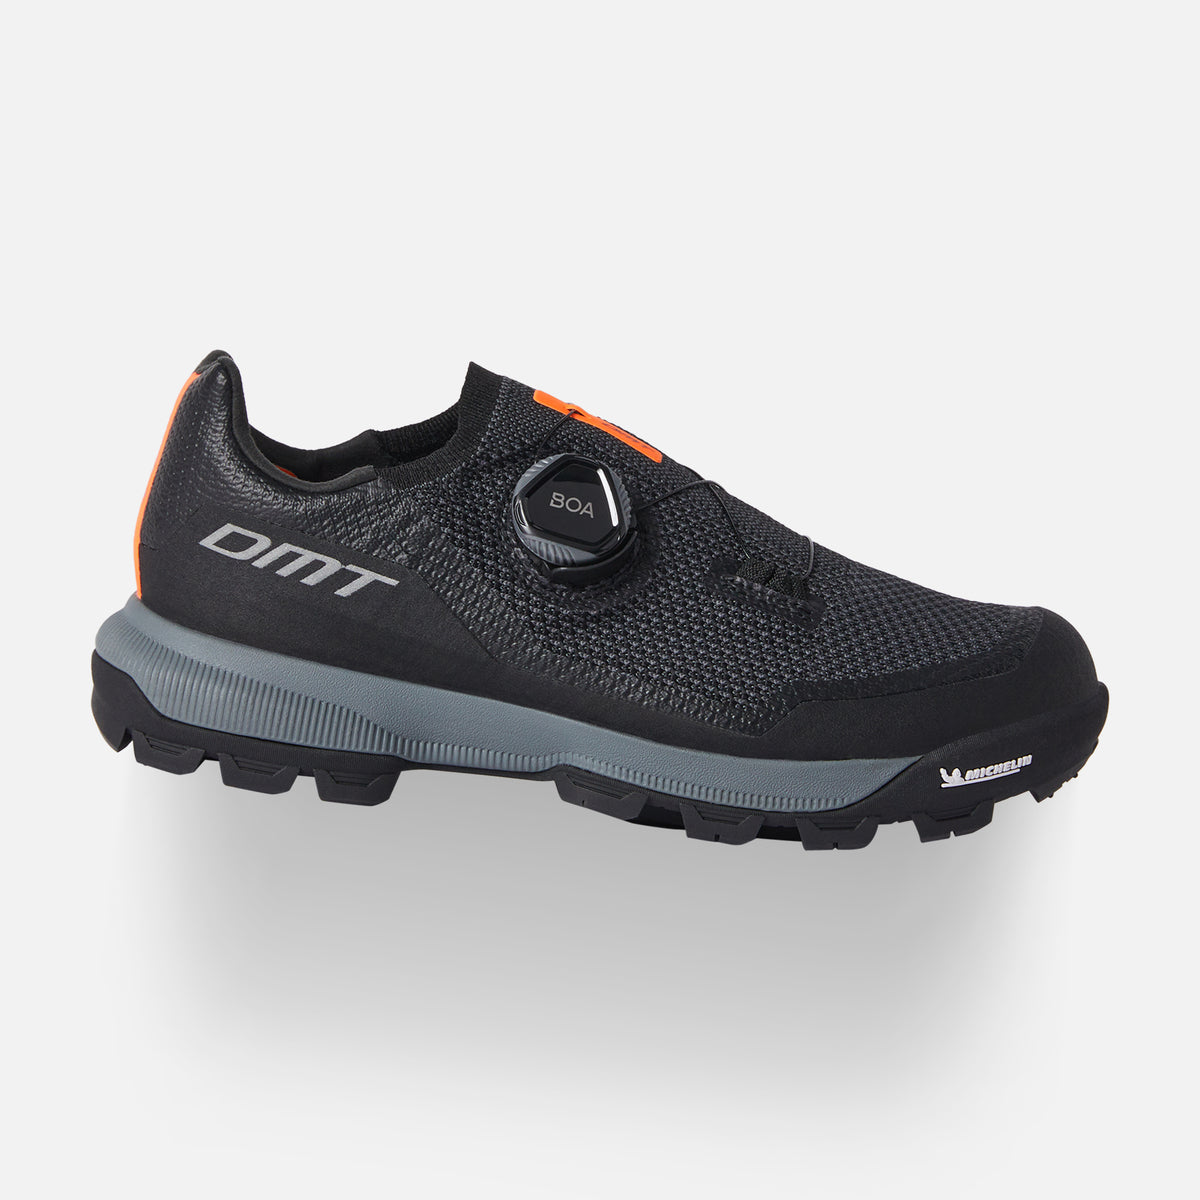 DMT Tk10 bike shoes Antracite/Black - DMT Cycling